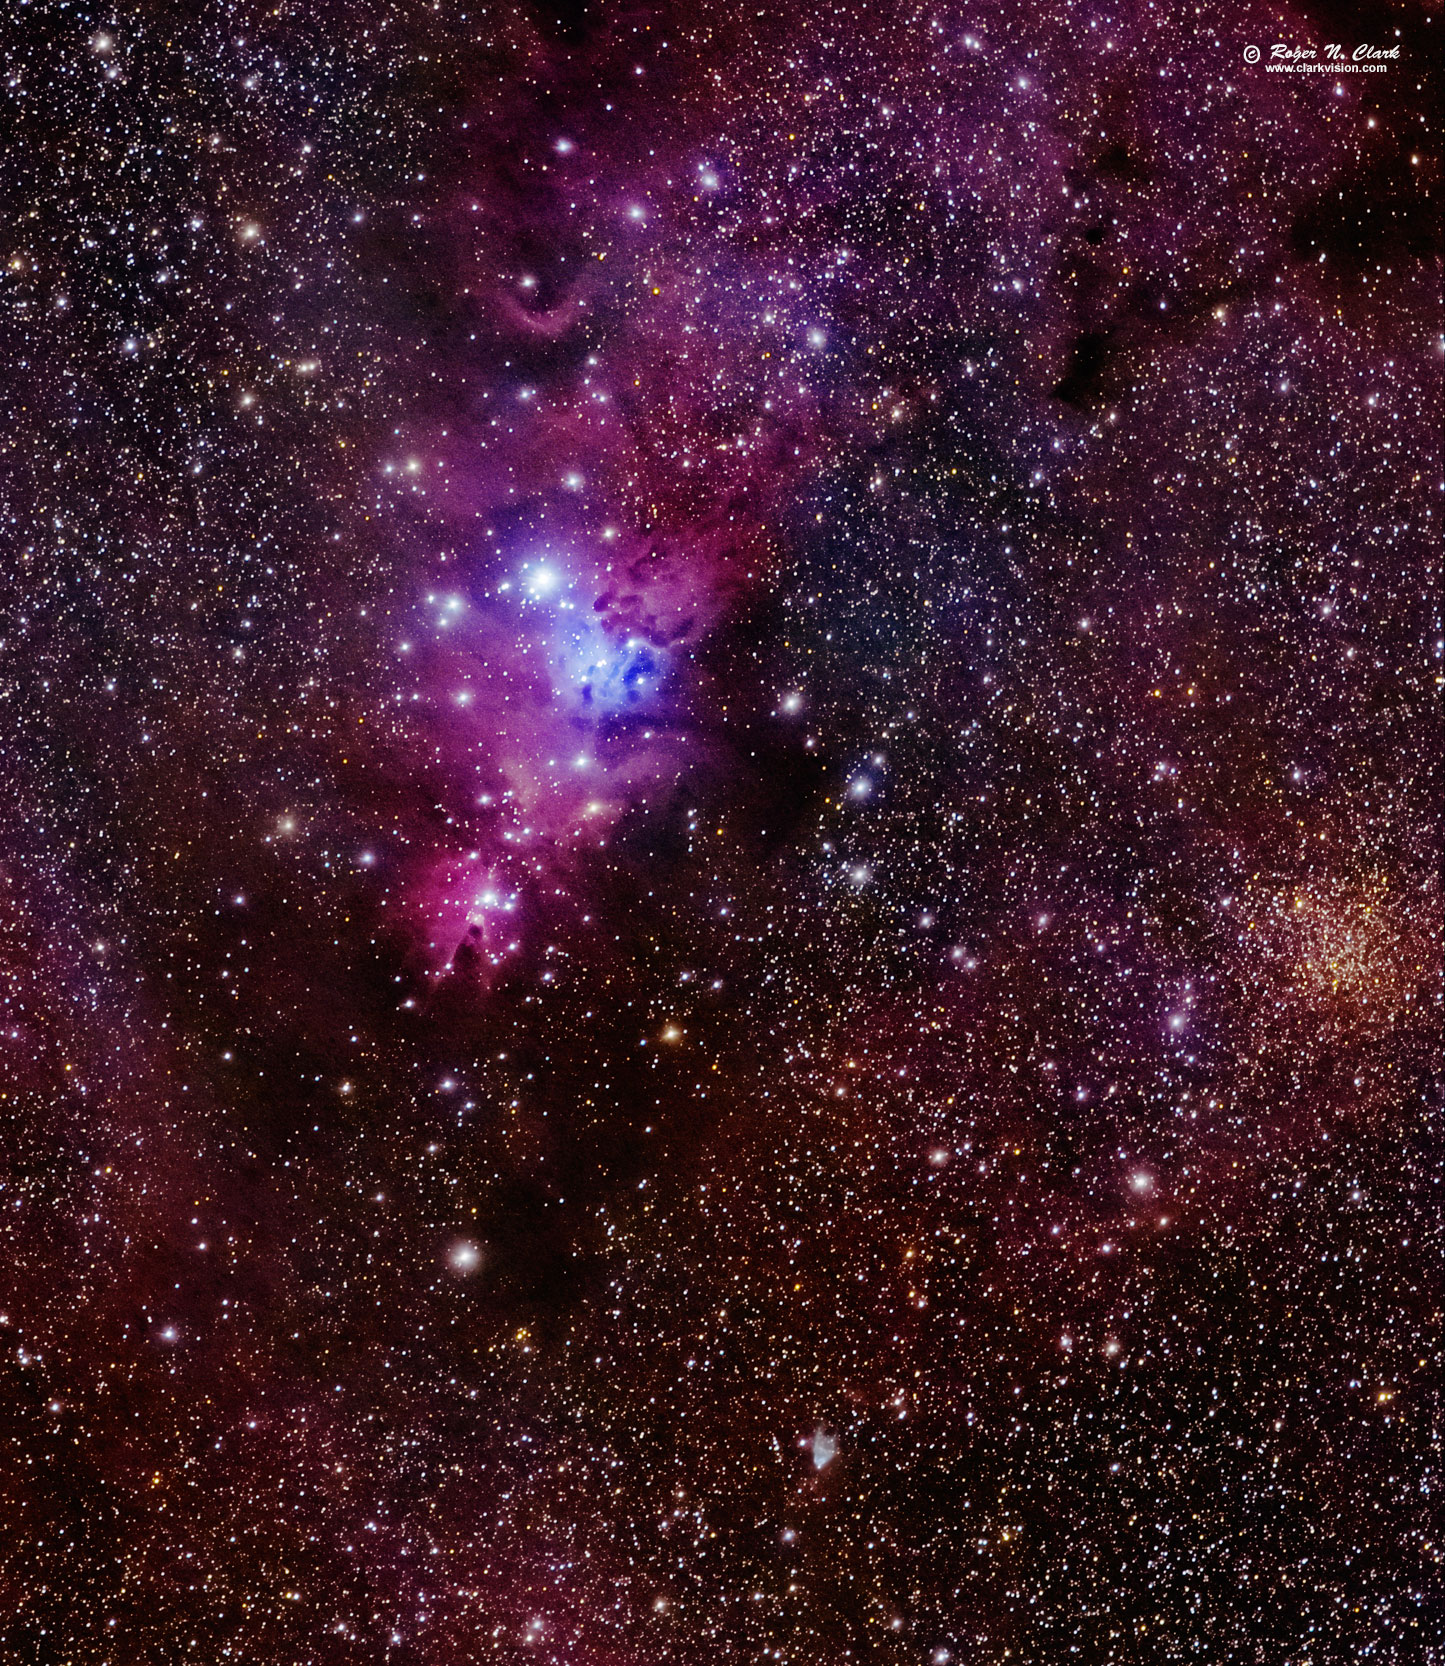 image cone-nebula.300mm.c02.01-2.2016.106m.0J6A7104-489.m-c1-0.6xs.jpg is Copyrighted by Roger N. Clark, www.clarkvision.com